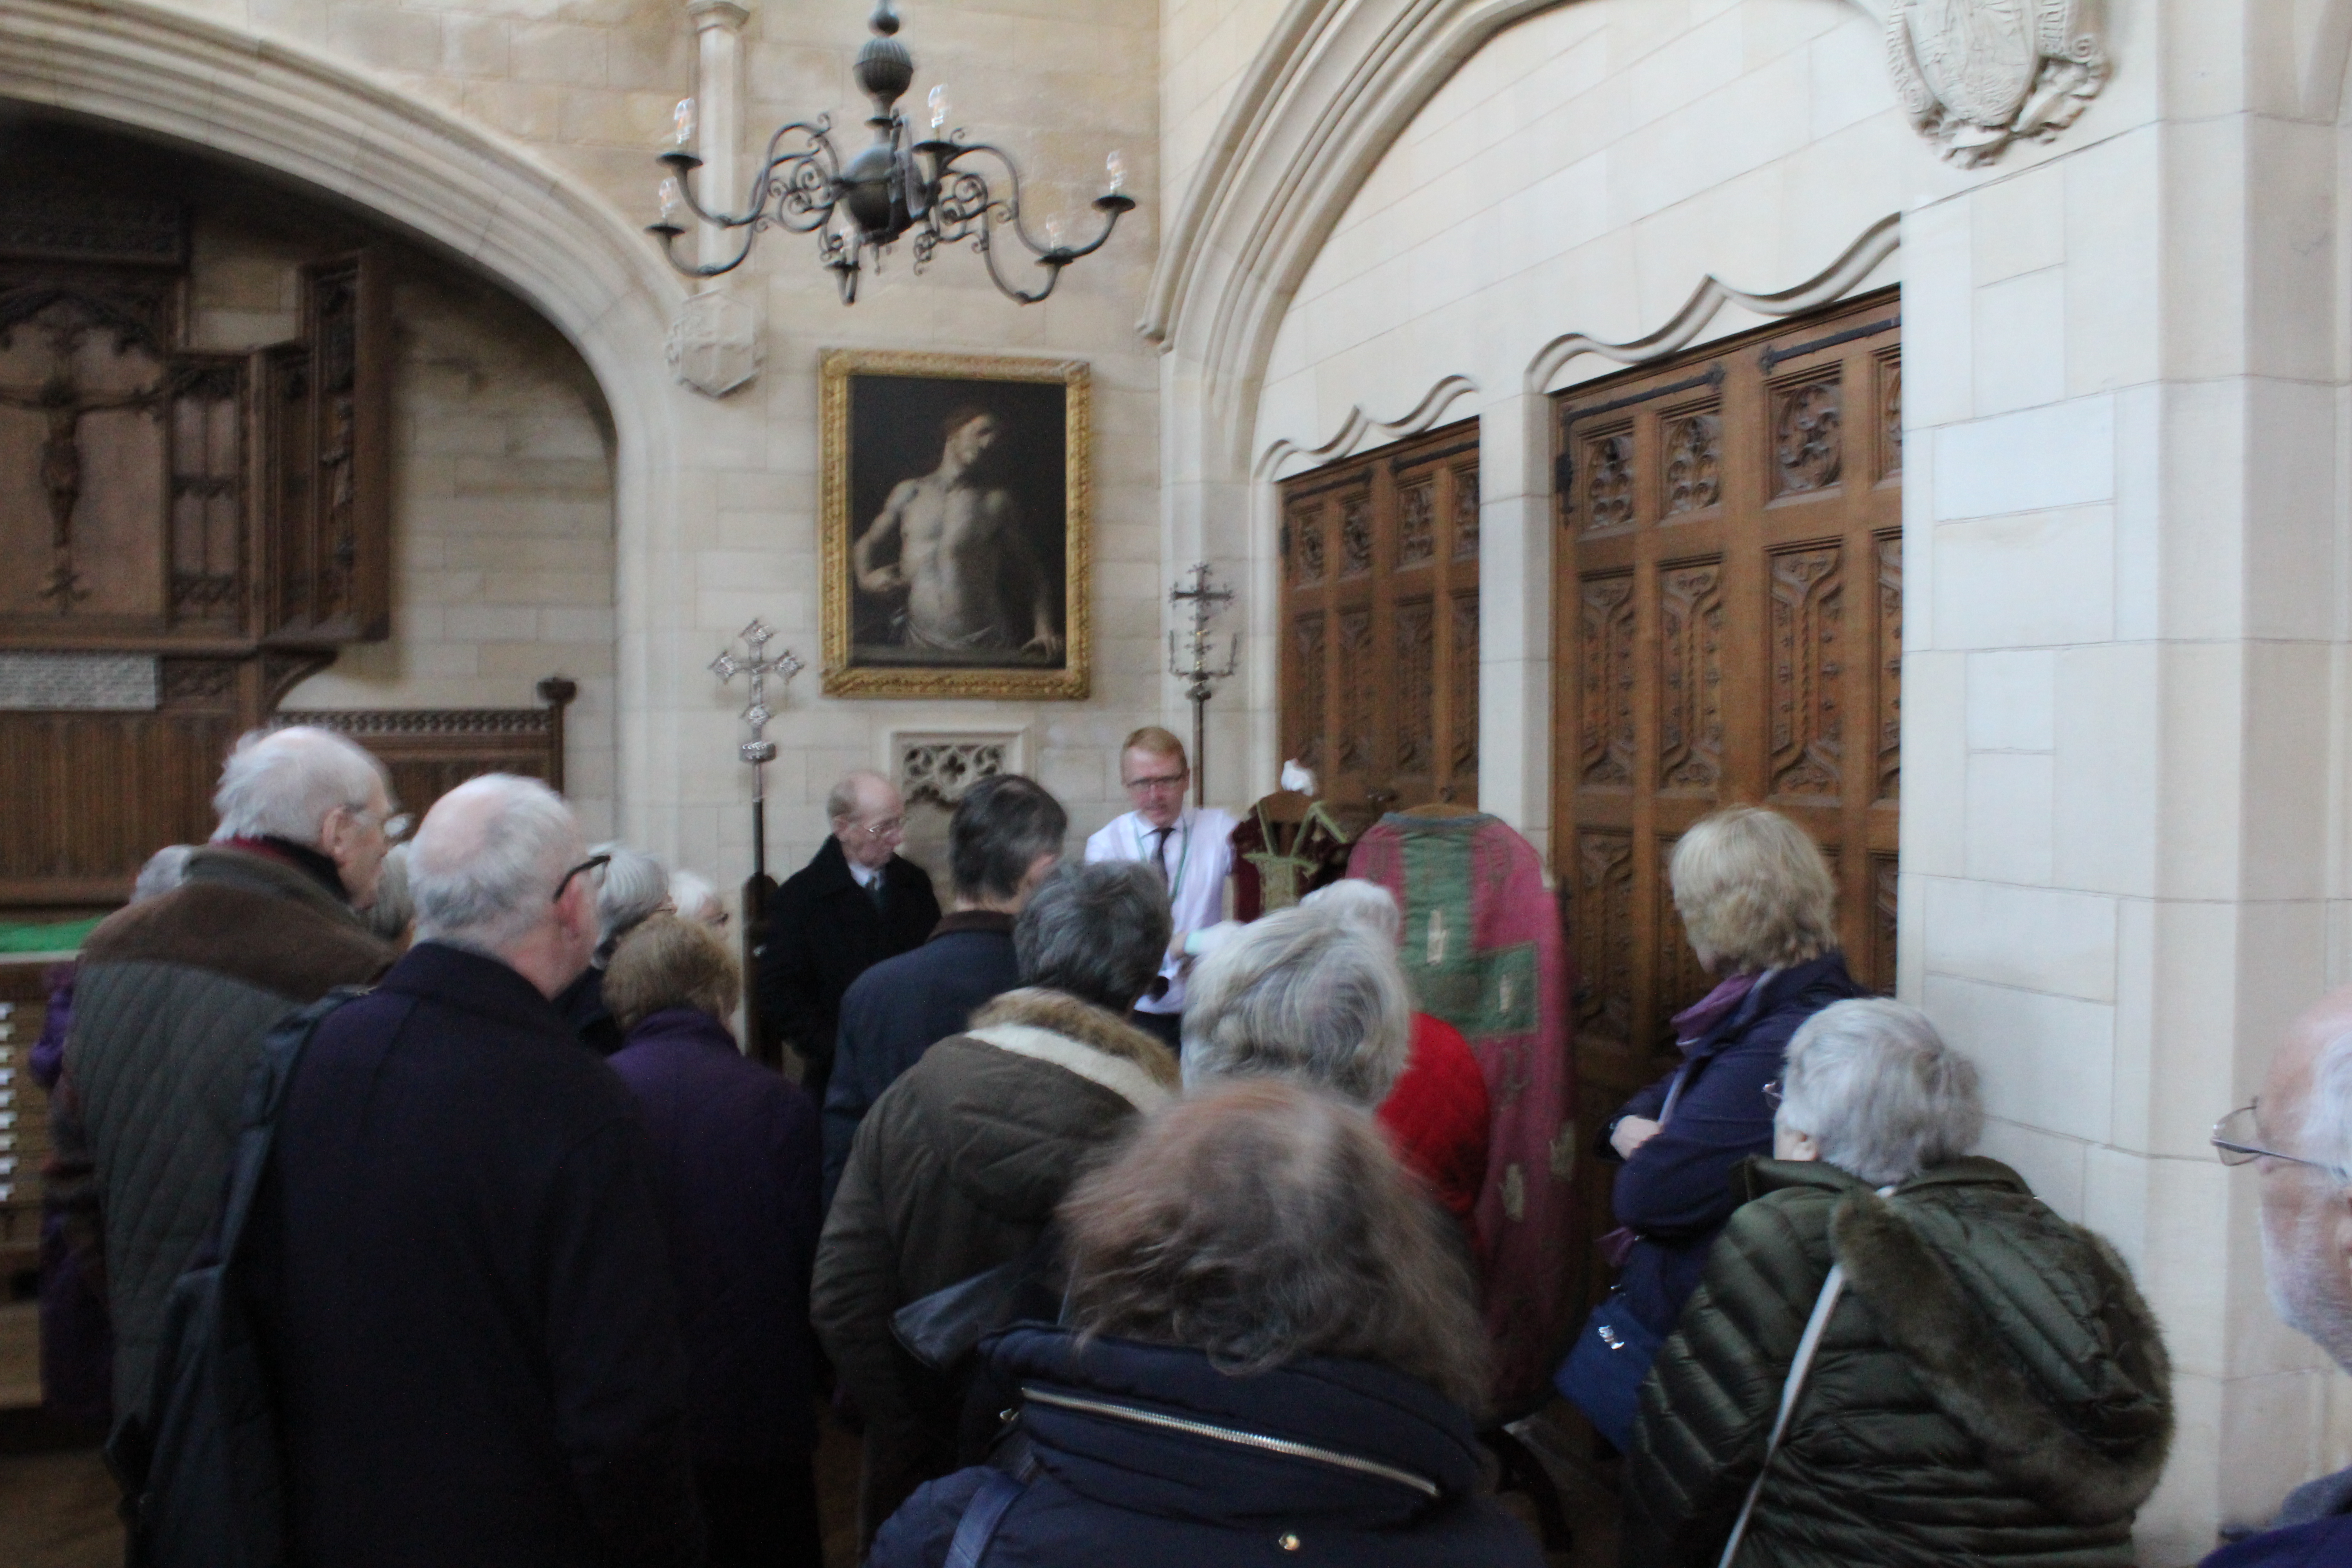 Downside abbey volunteers tour